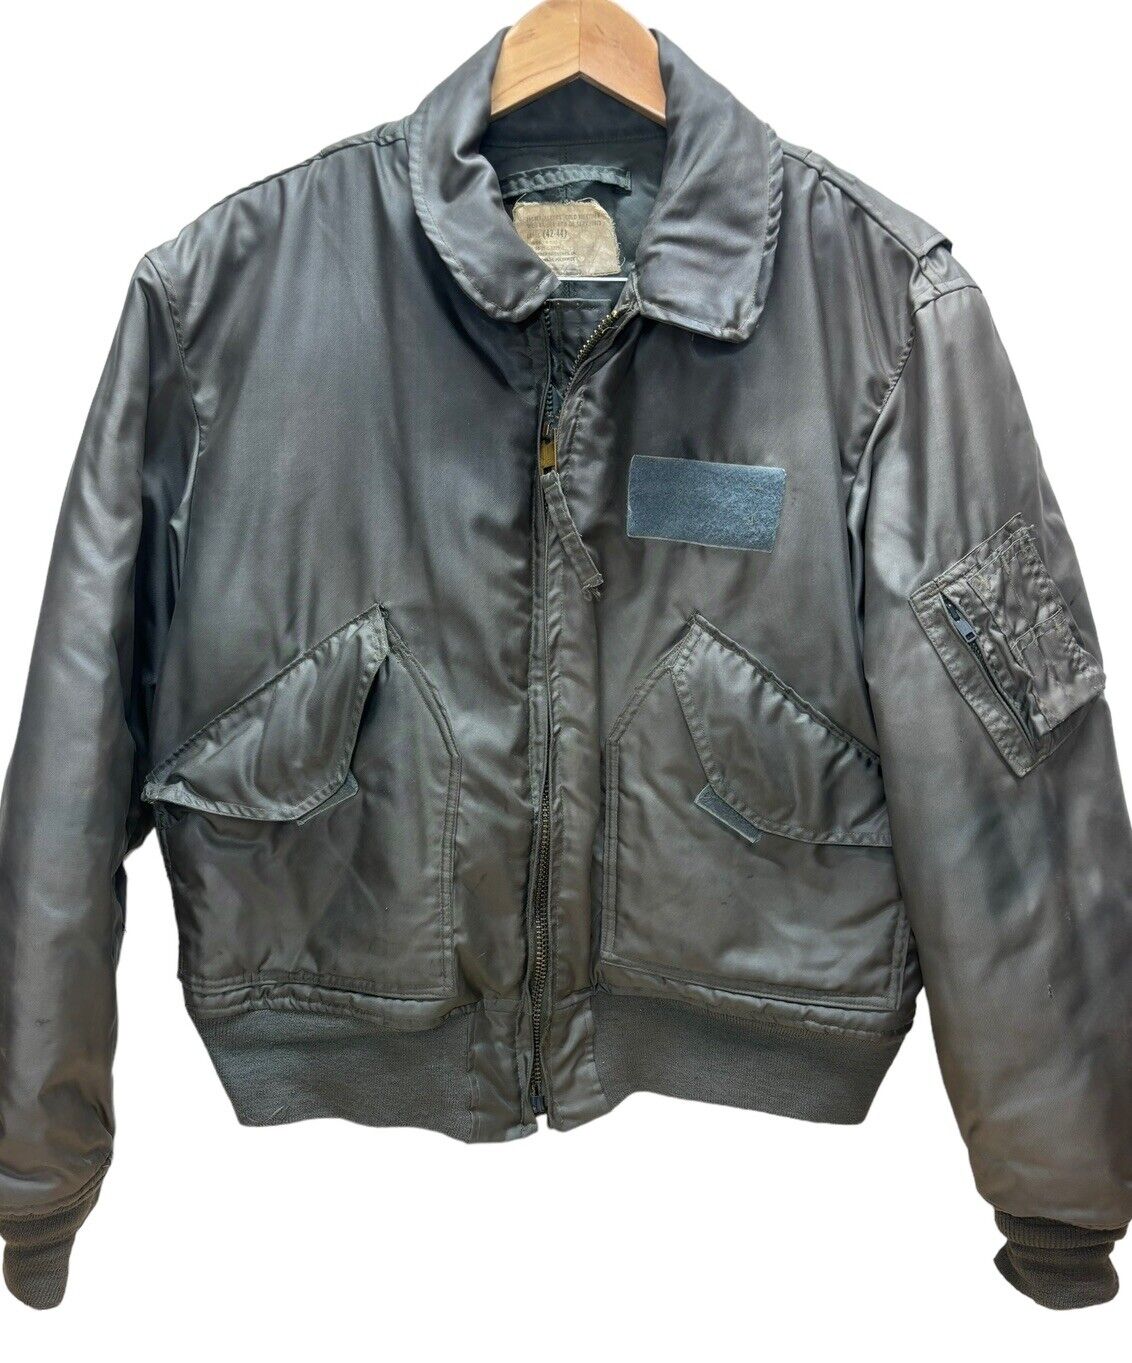 Military Jacket, Flyers Cold Weather Mil-j-83388a Dtd 5Sept. 1973 Large 42-44